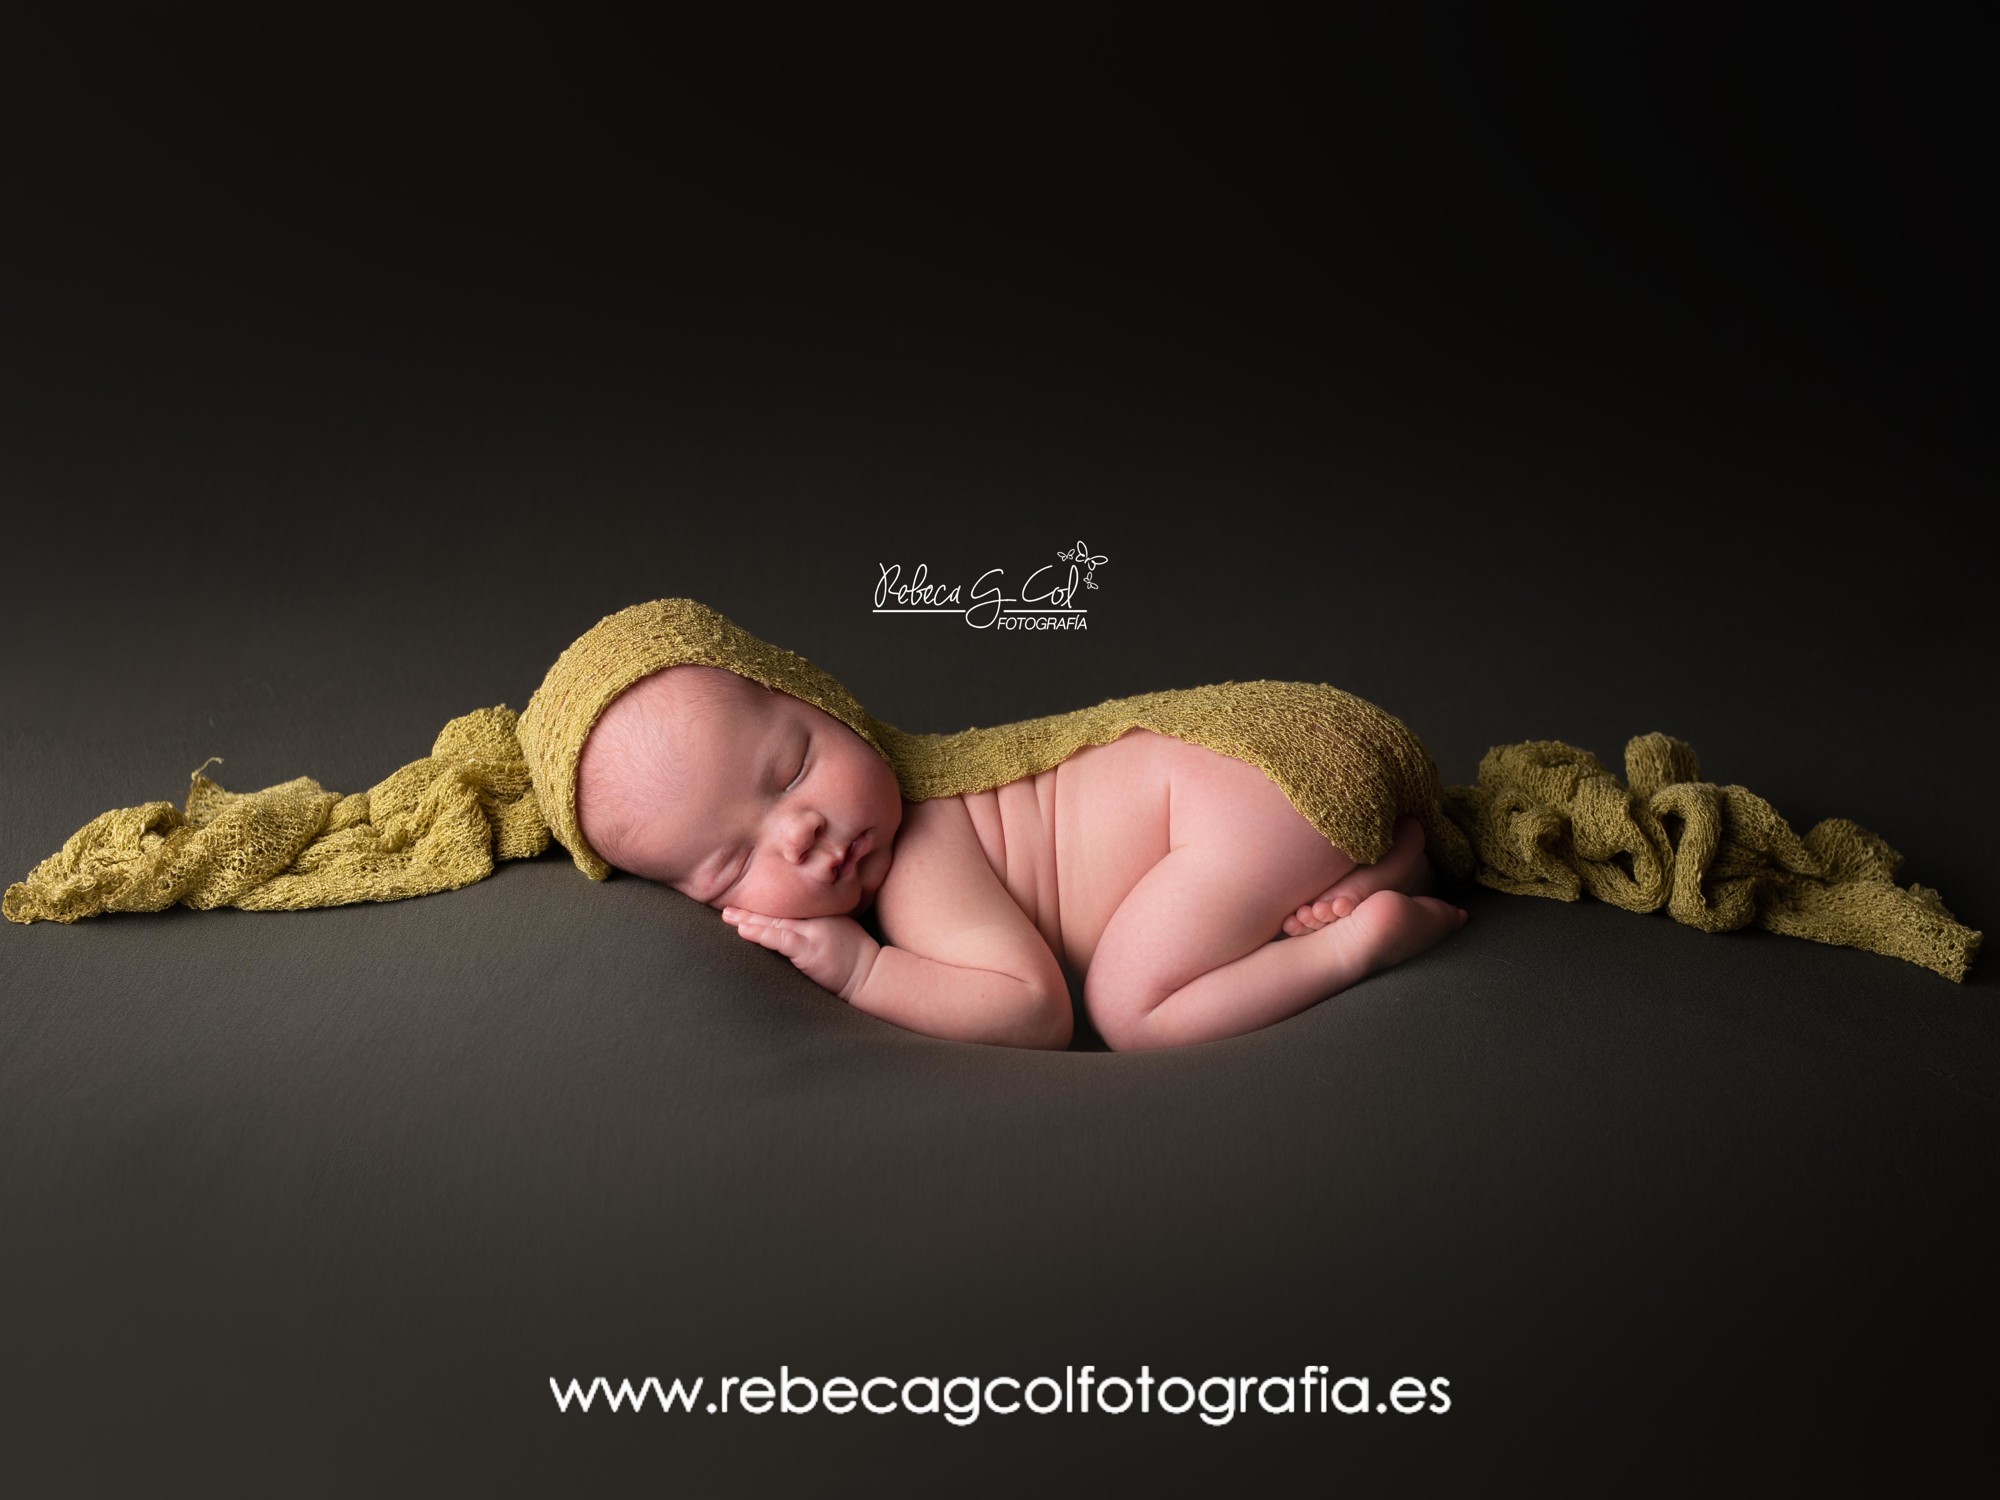 Rebeca GCol Fotografía - fotografia-recien-nacido-newborn-madrid-alcala-de-henares-184.jpg